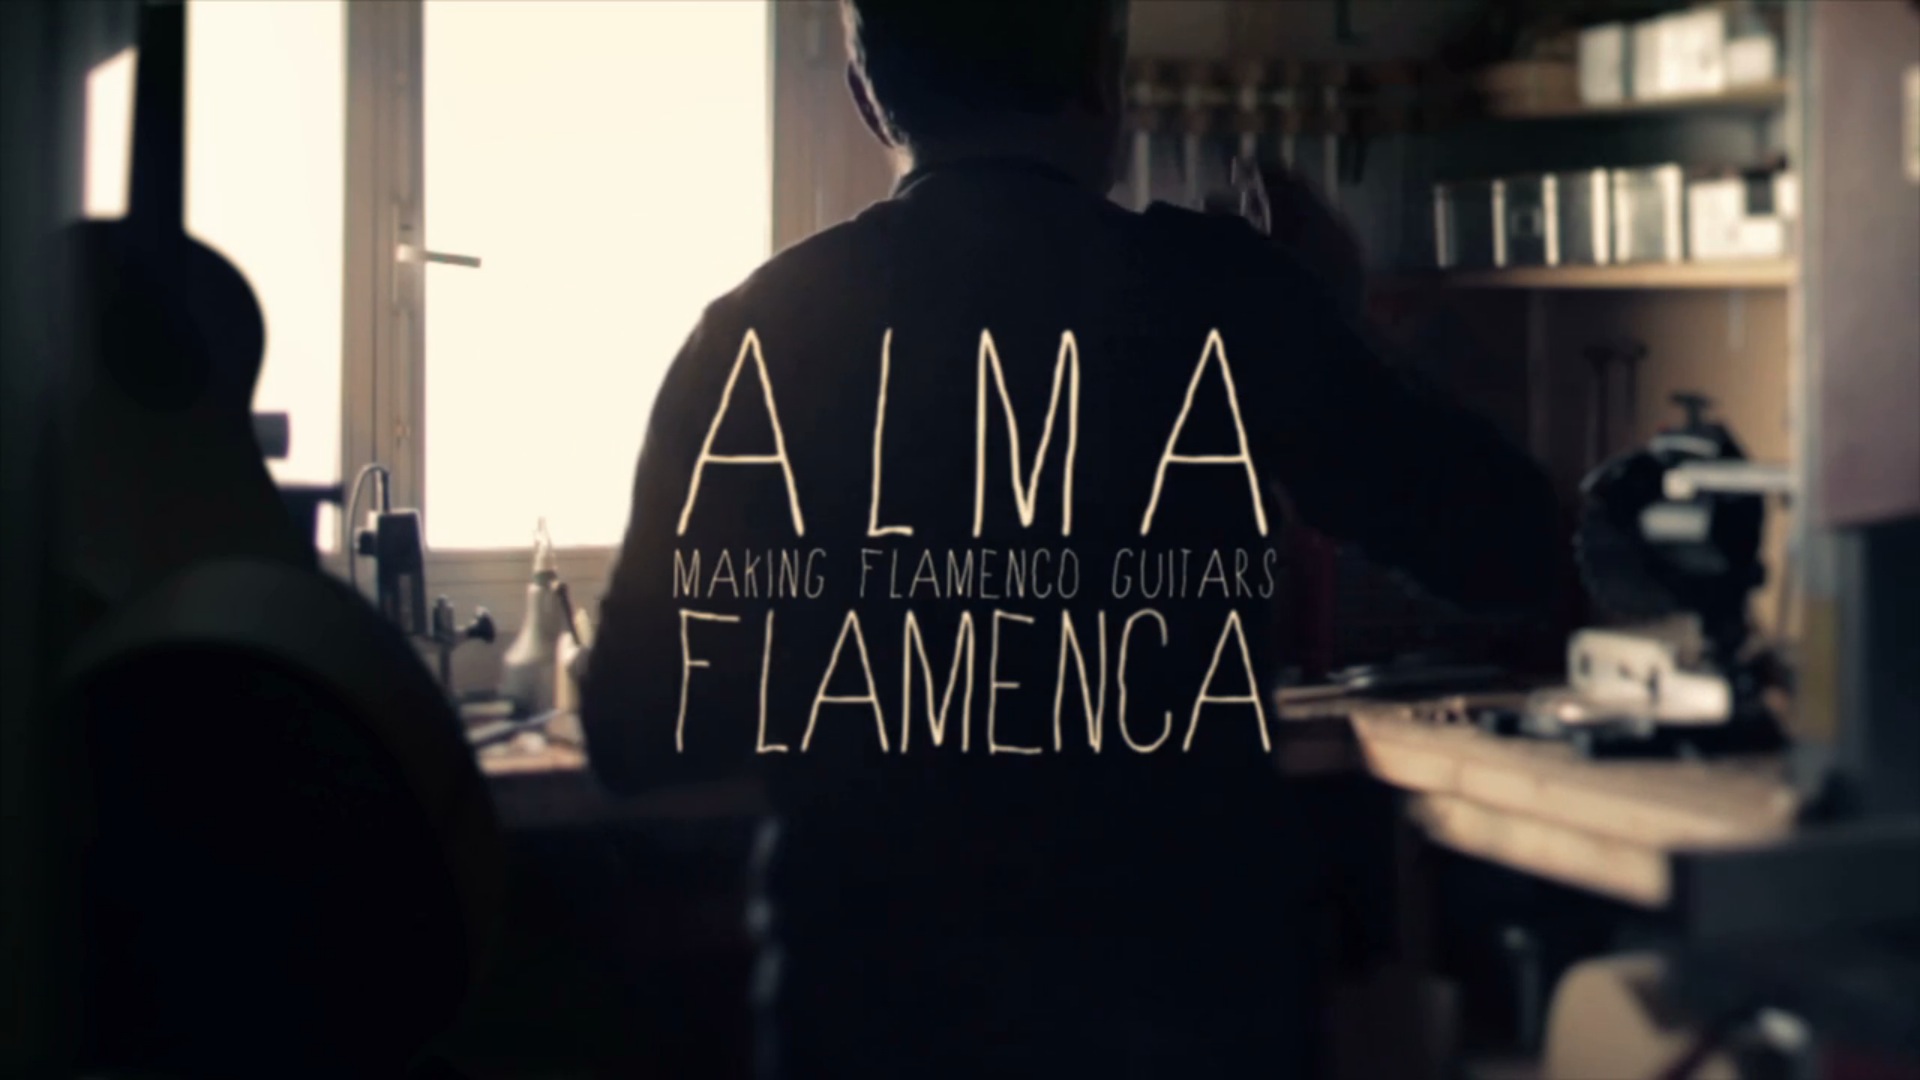 Alma Flamenca